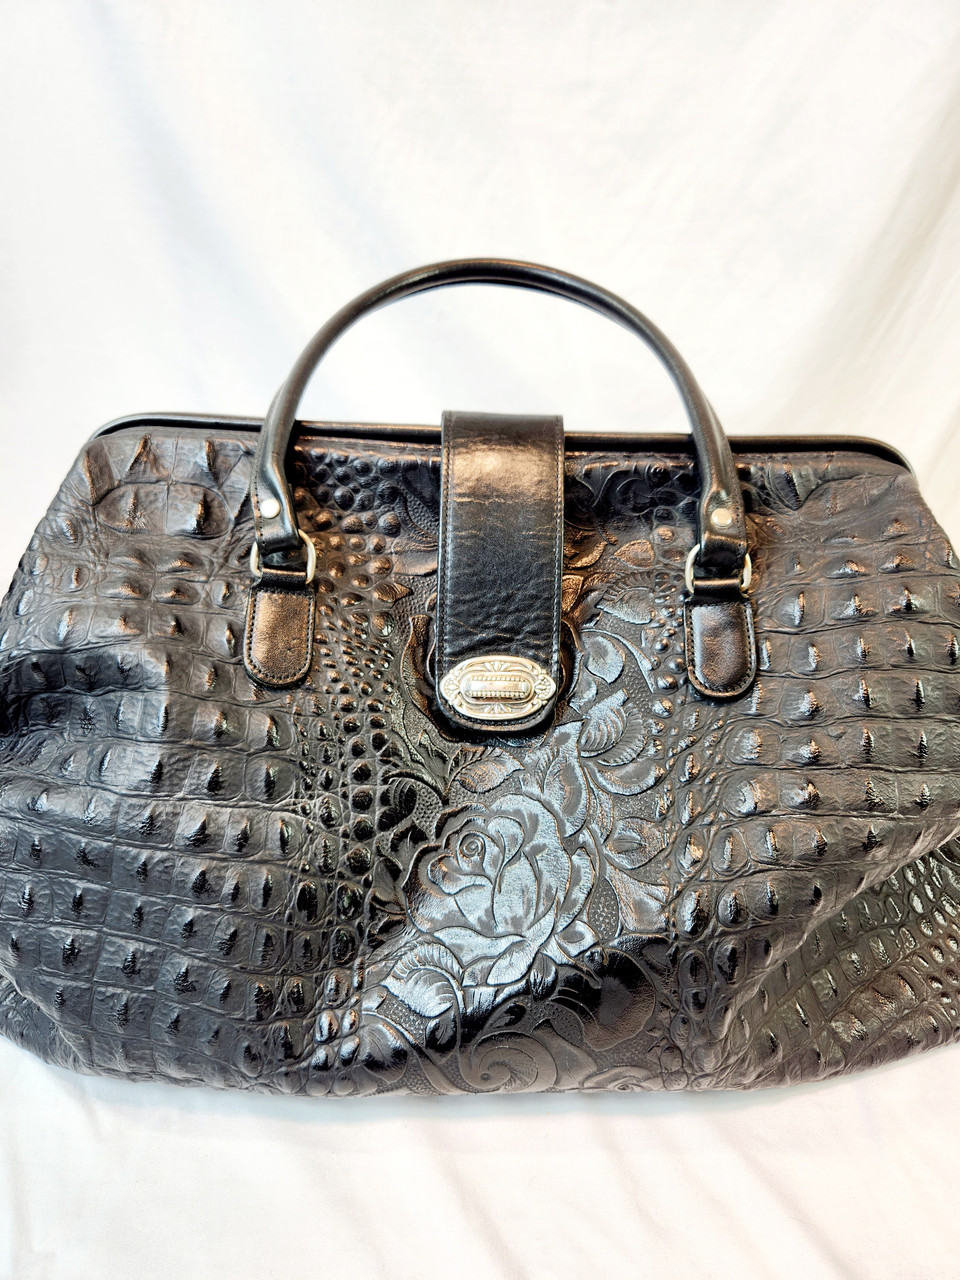 19/22/25cm Croc Effect Real Leather Flap Shoulder bag Tote Clutch Purse  Fashion | eBay